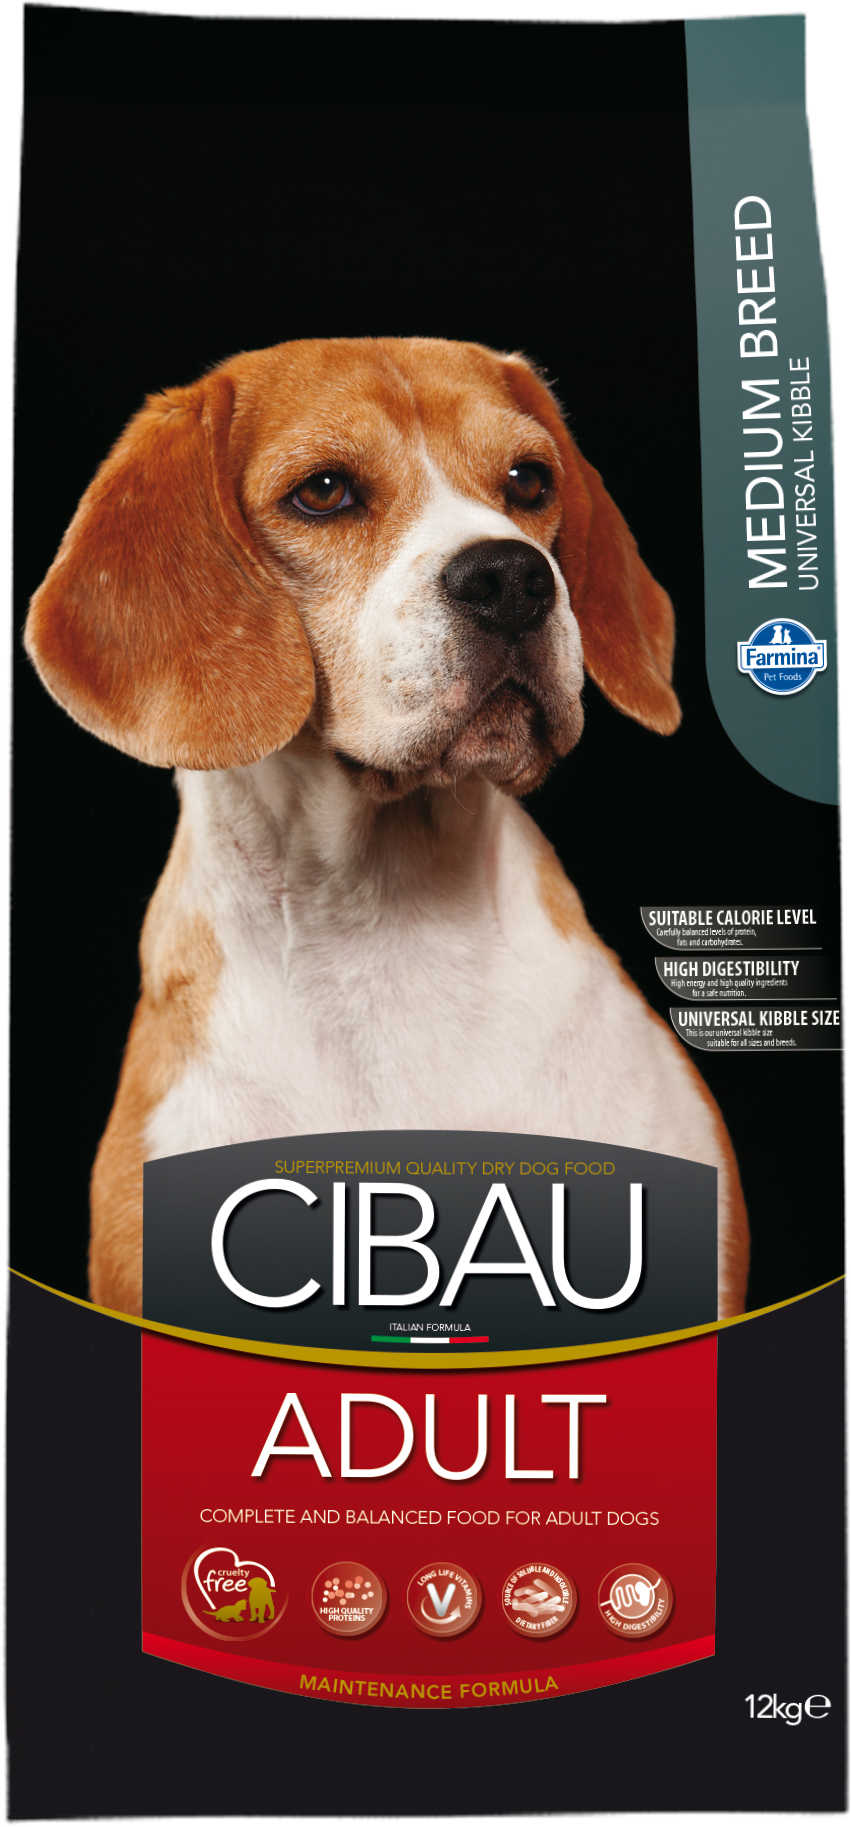 CIBAU dog adult medium 2,5kg